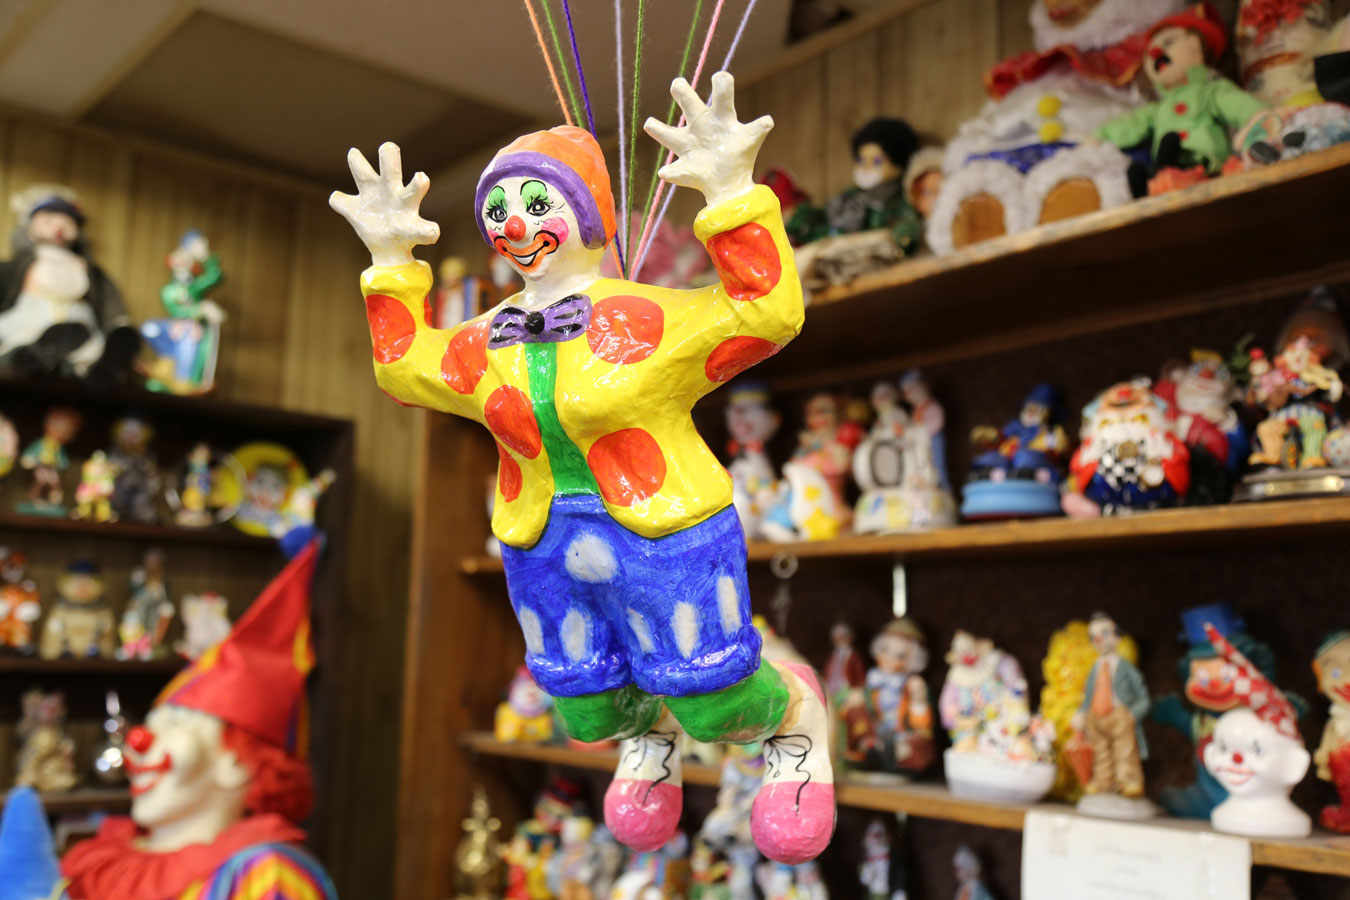 Clown doll at Clown Motel